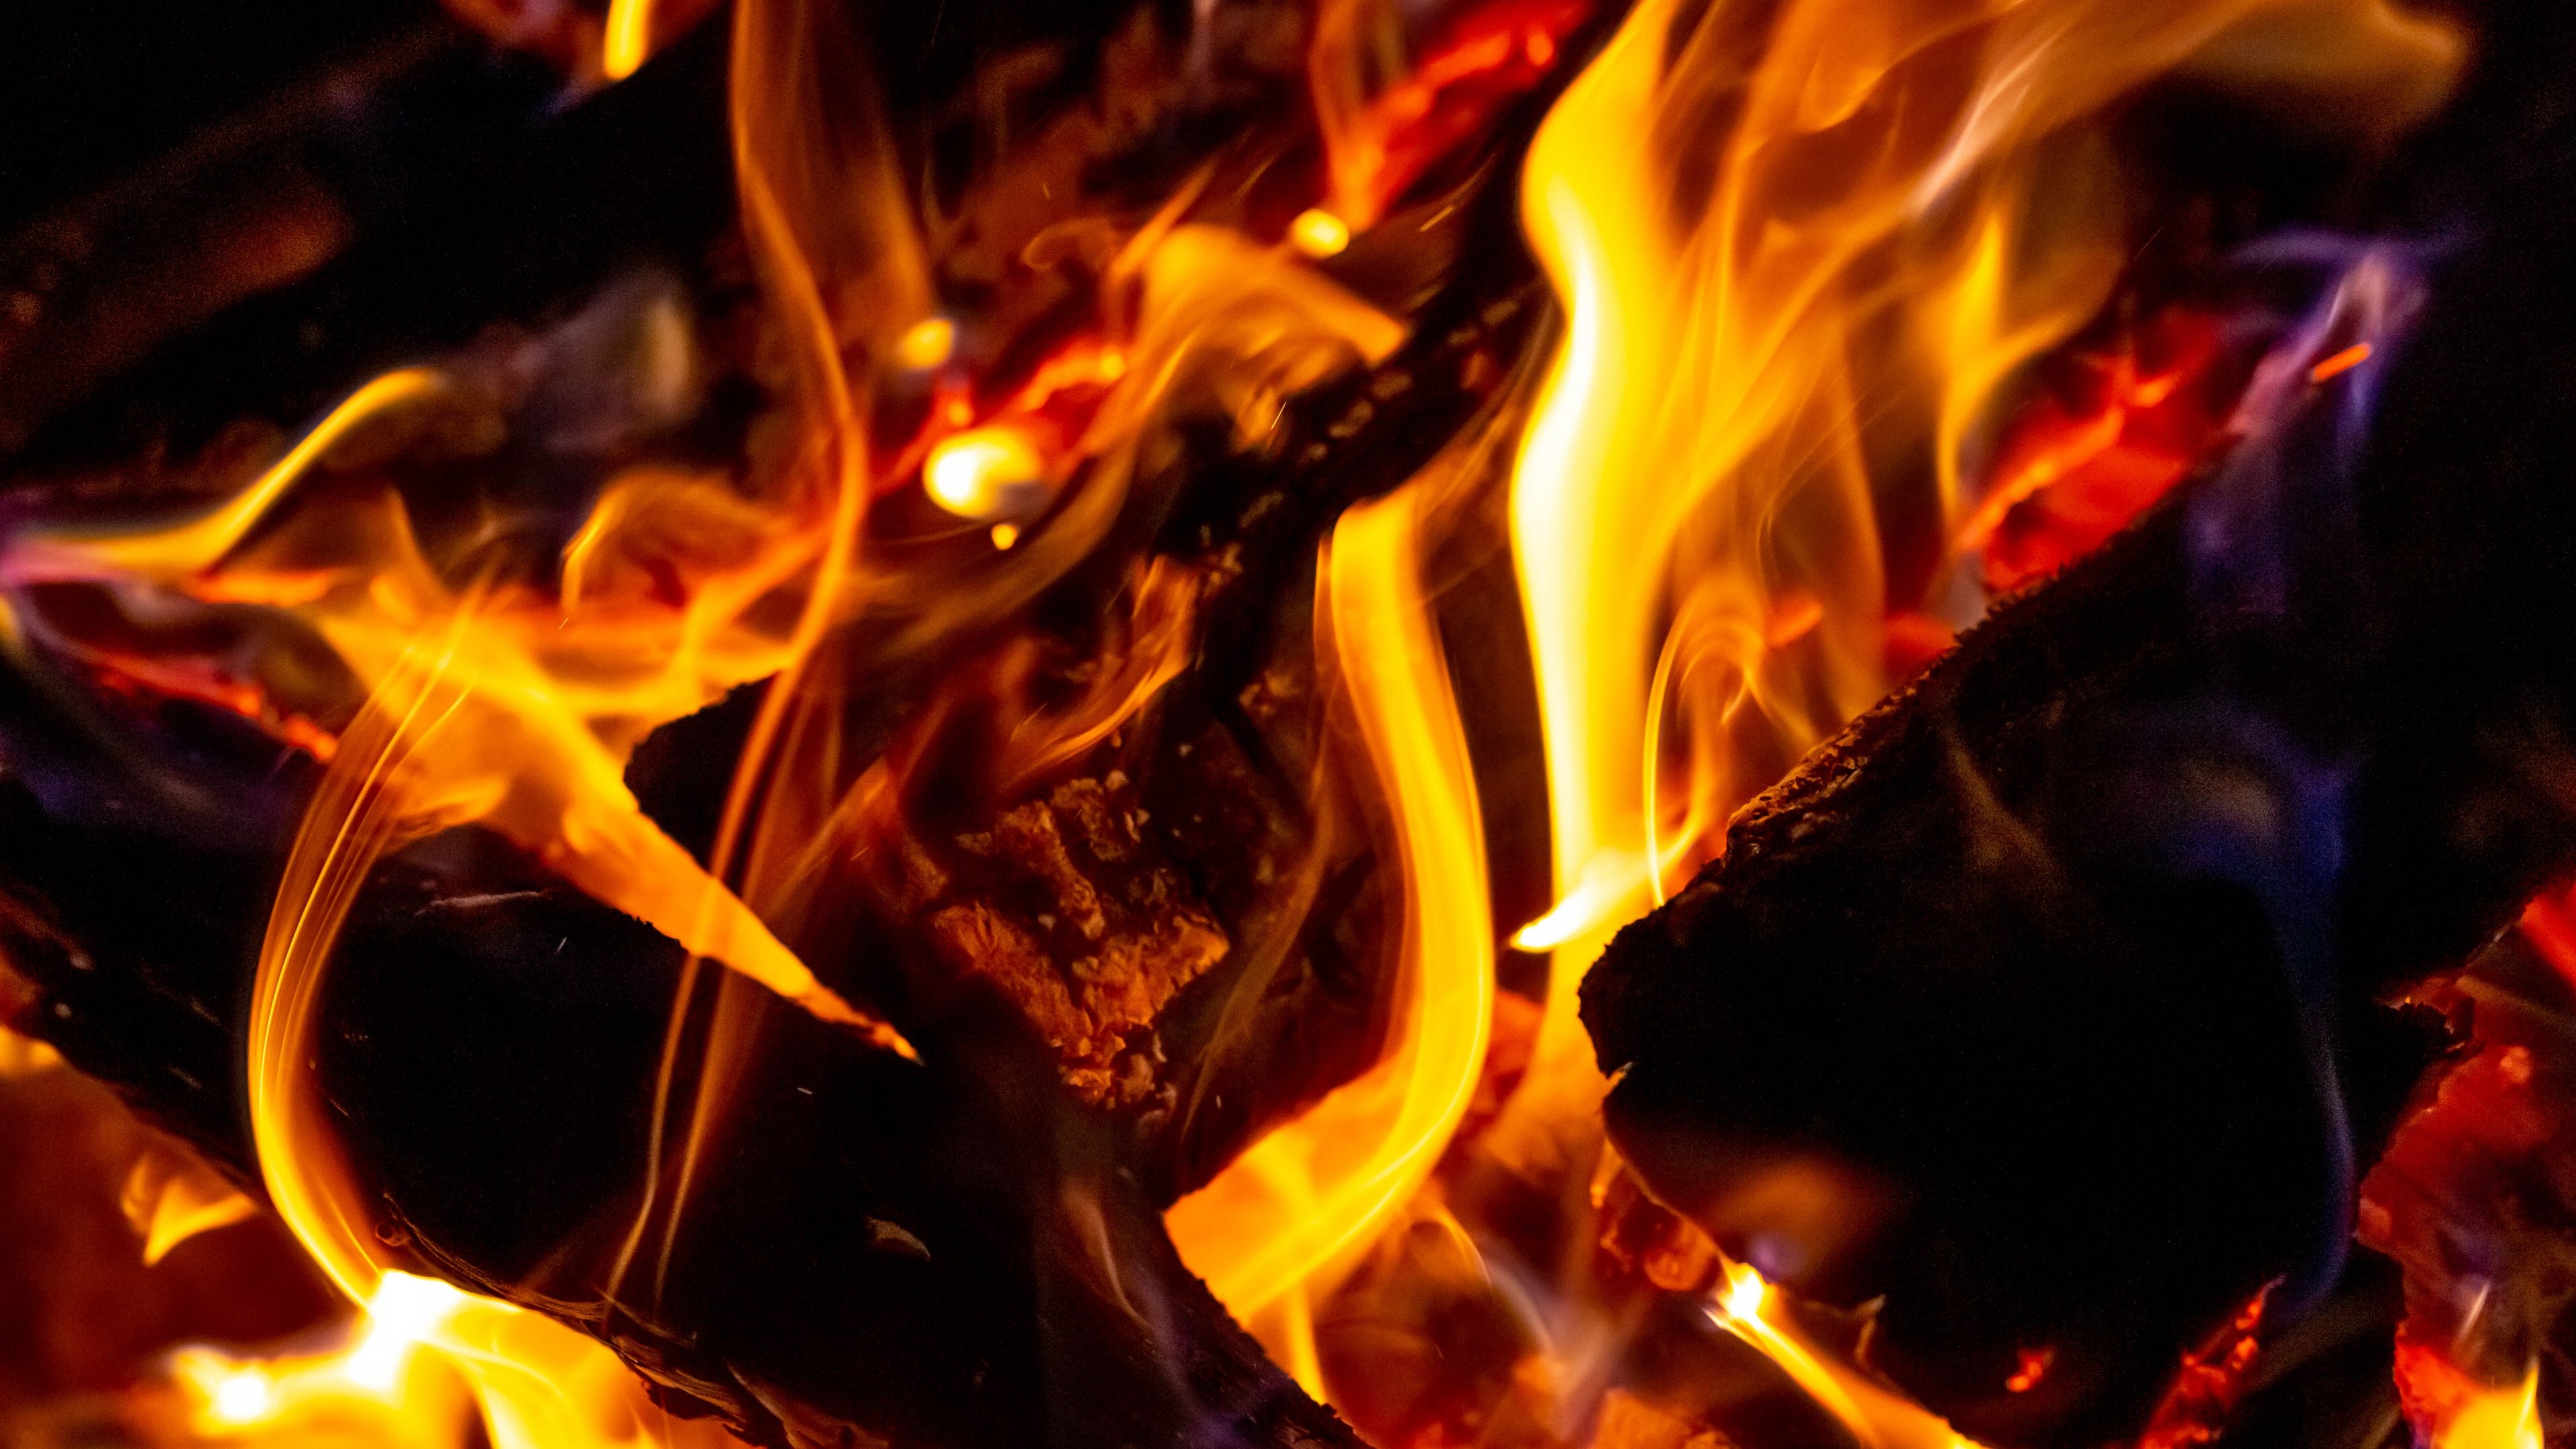 Fireplace: Bonfire, The visible, gaseous part of a fire. 3840x2160 4K Wallpaper.